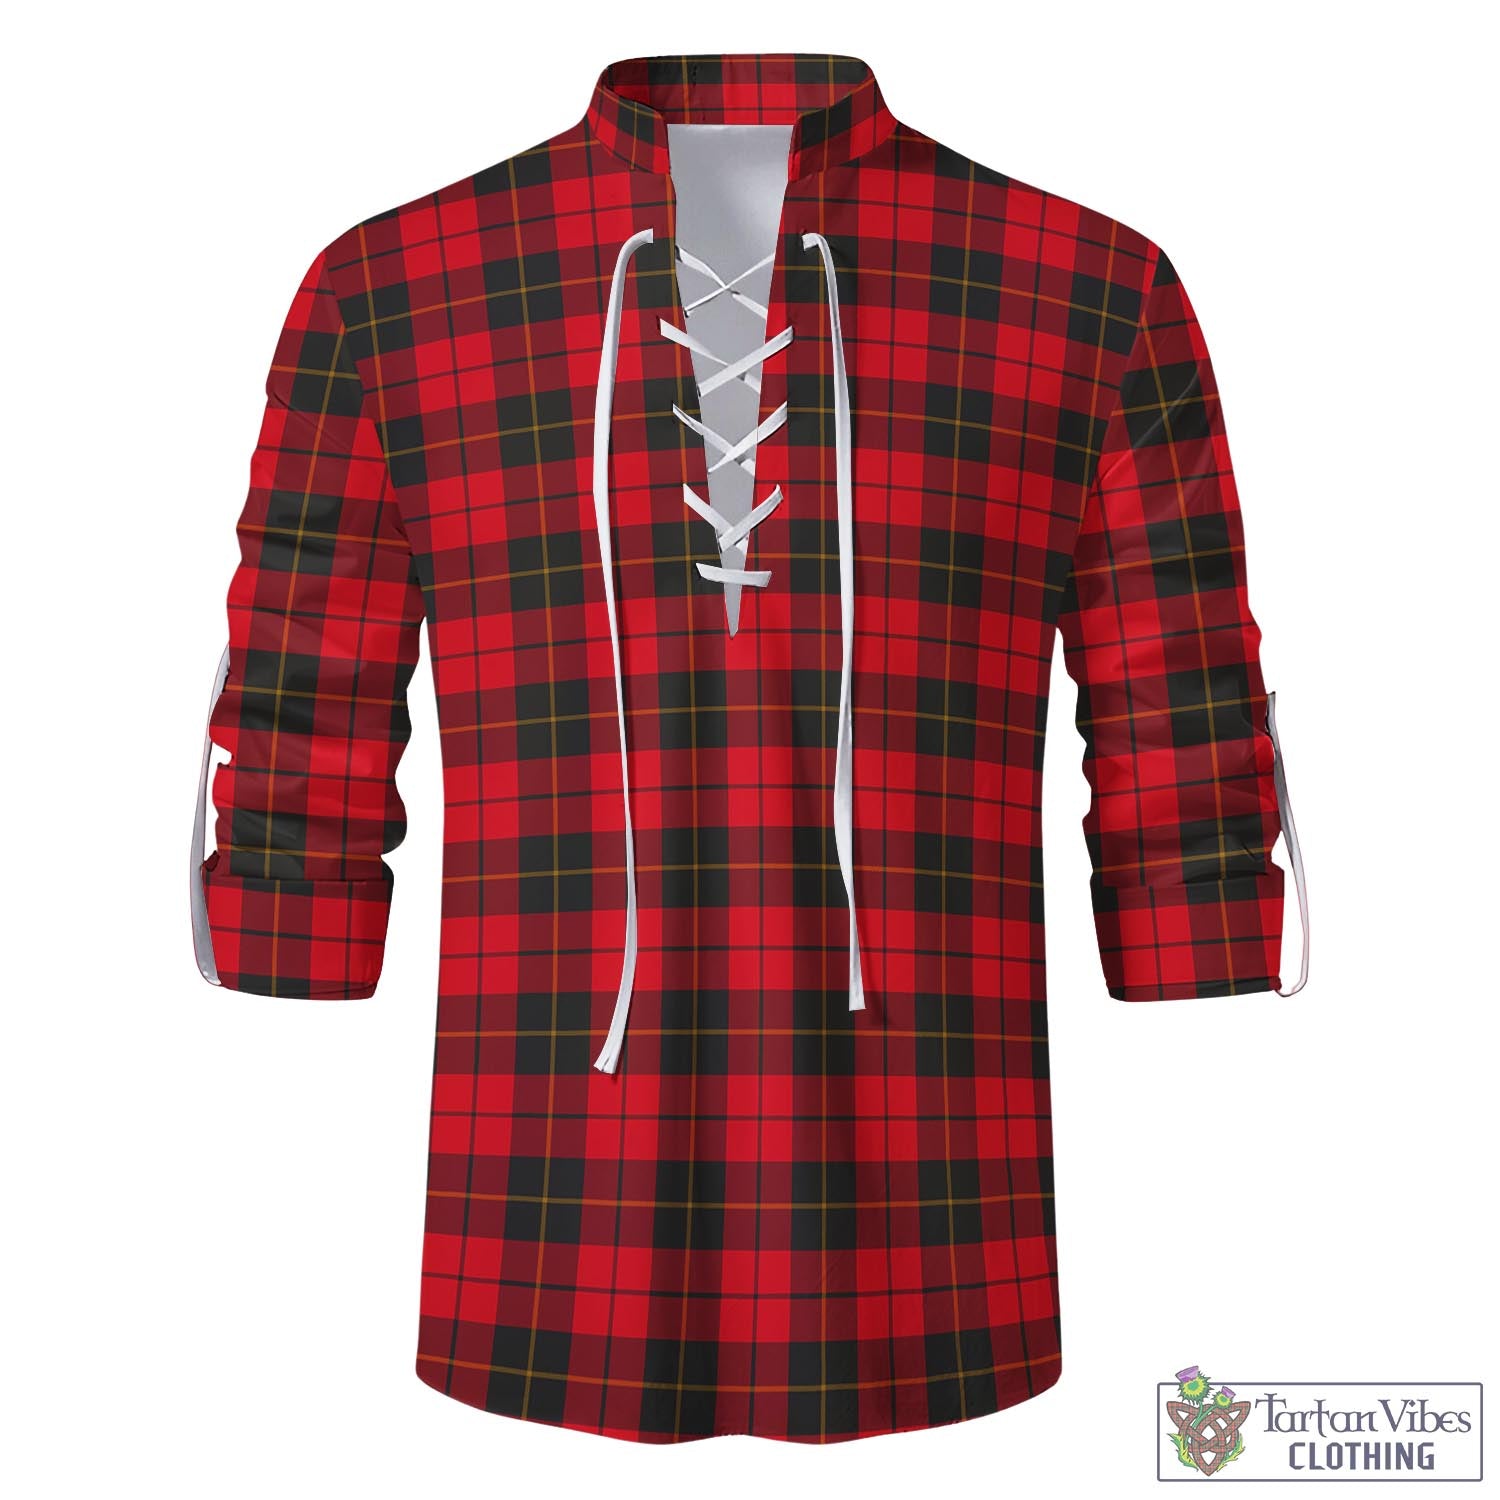 Tartan Vibes Clothing Wallace Weathered Tartan Men's Scottish Traditional Jacobite Ghillie Kilt Shirt